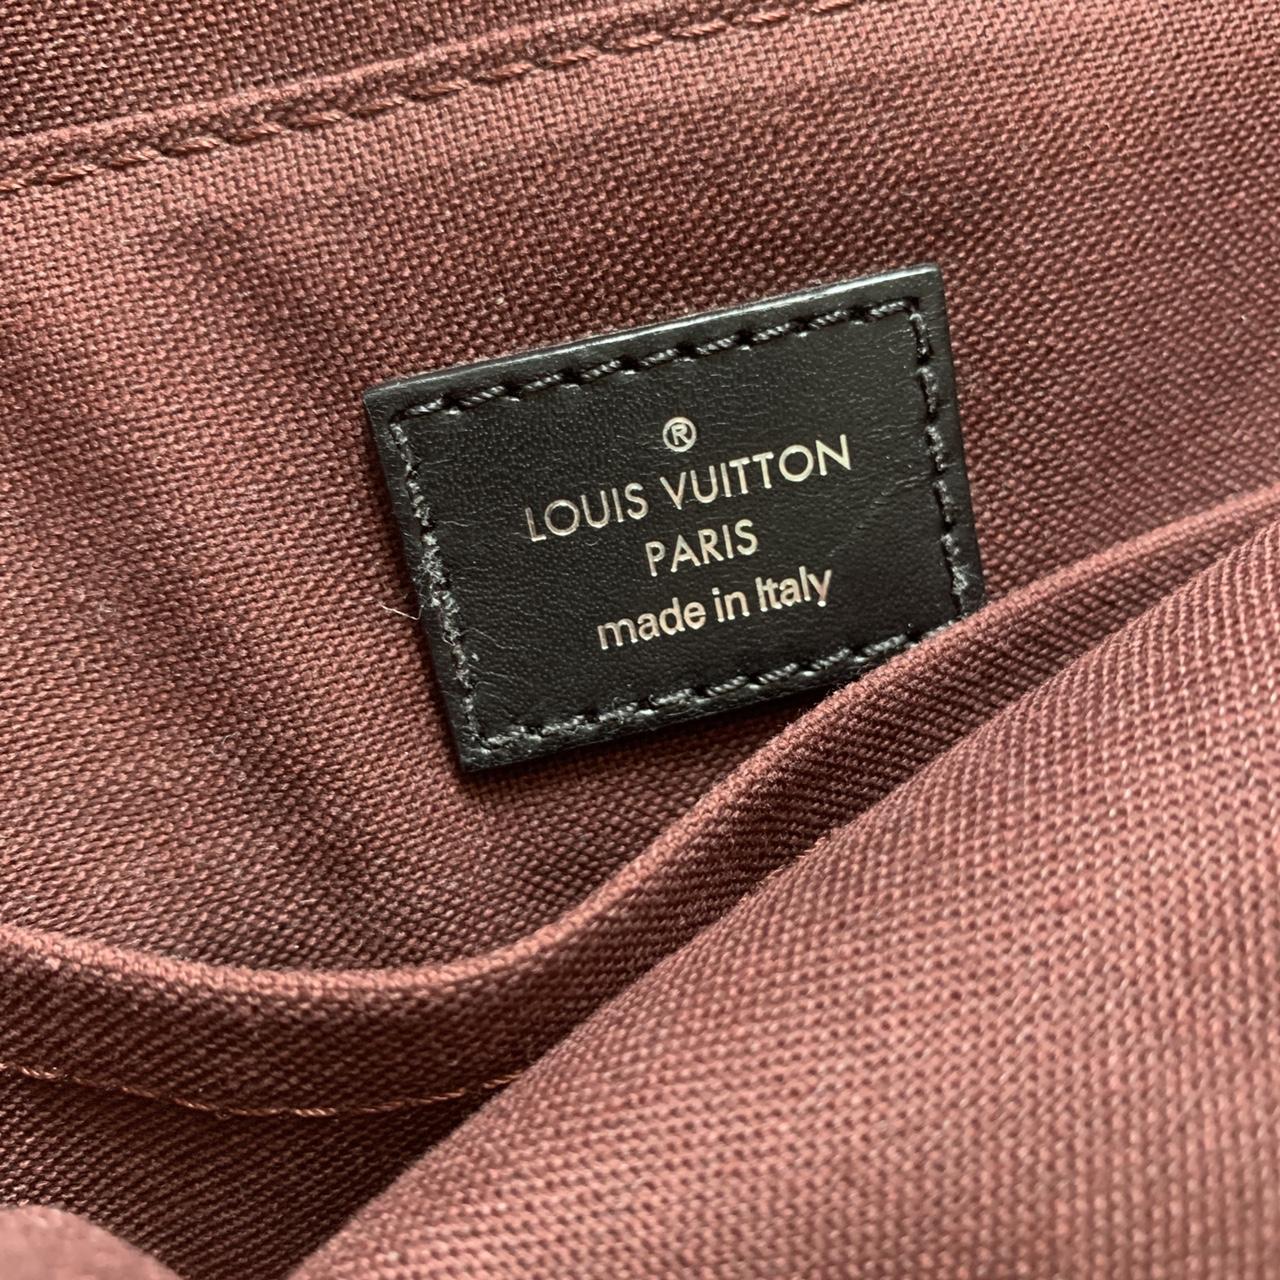 Louis Vuitton men's bag Dayton reporter - Depop